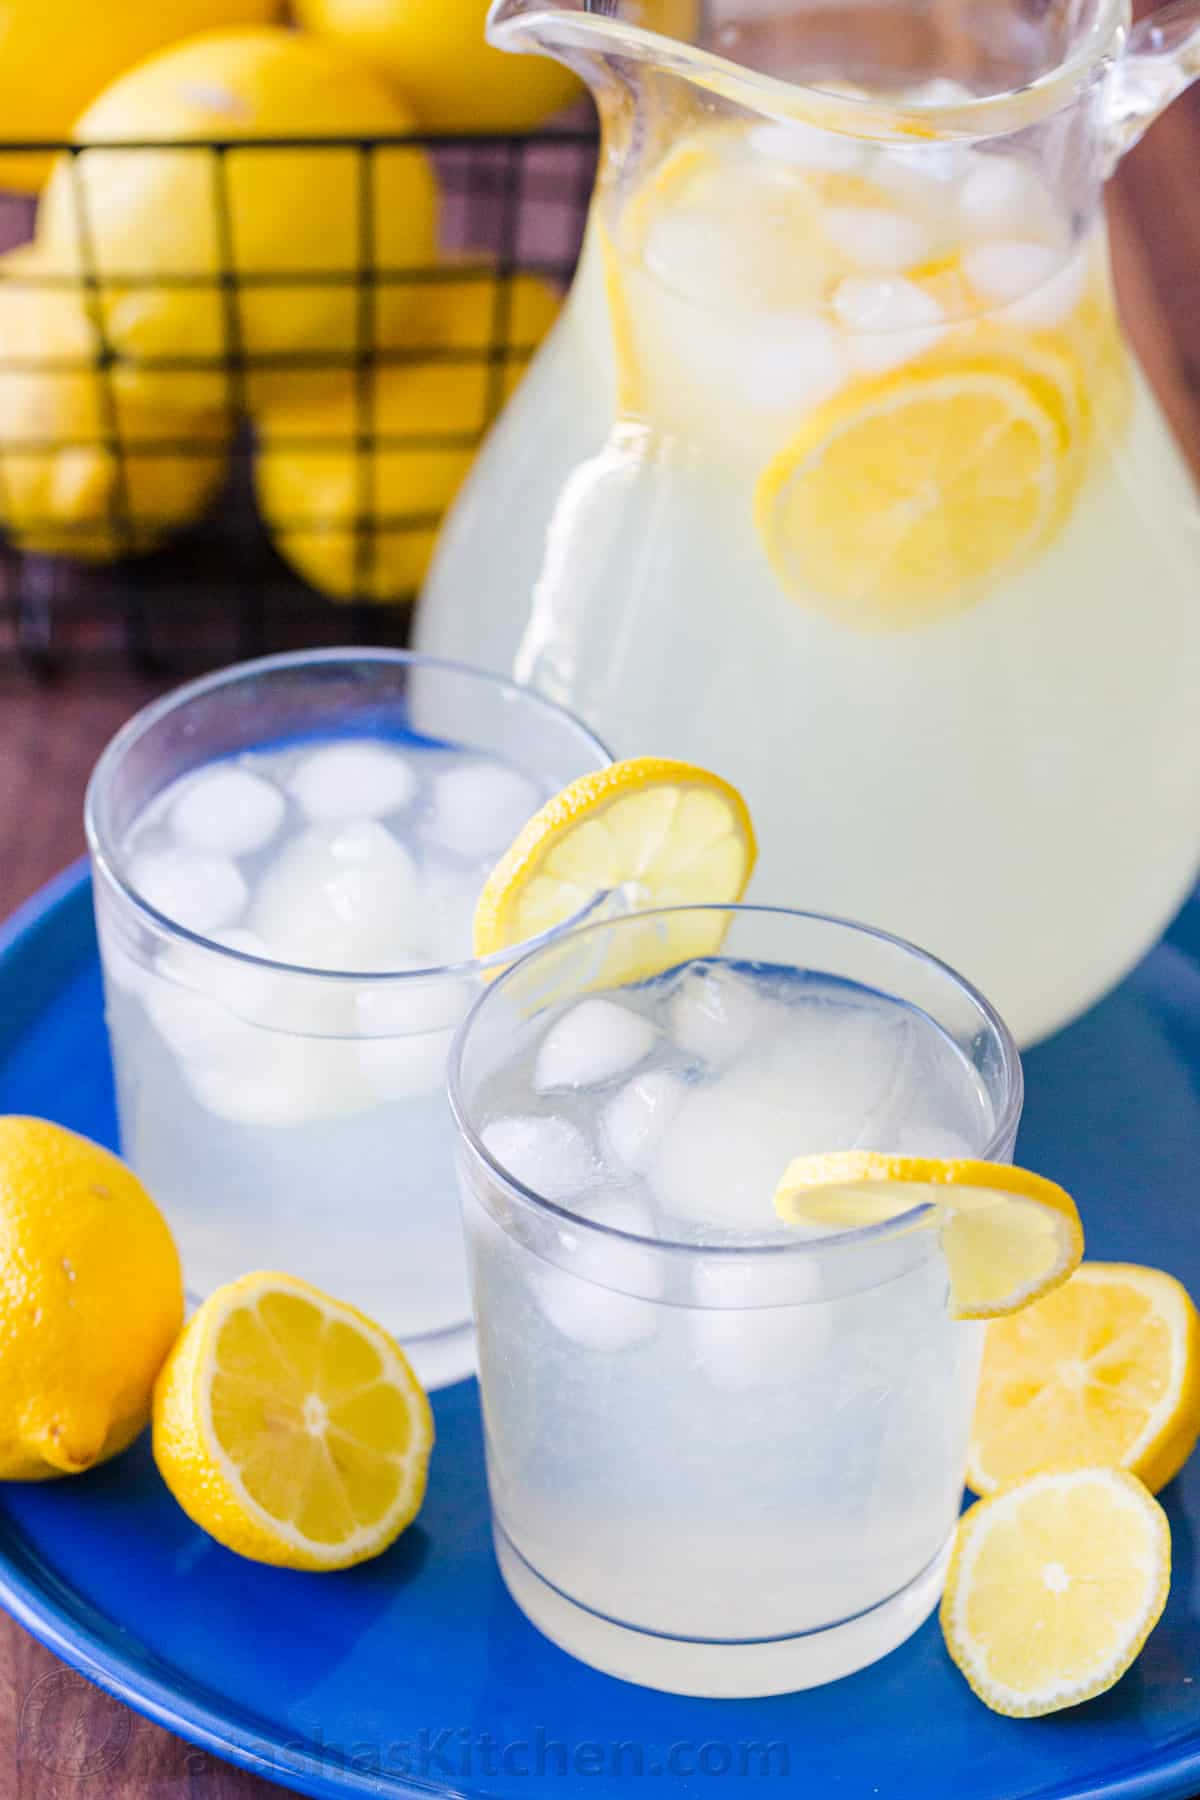 Enjoy the sweet taste of a freshly-made glass of lemonade on a hot summer day